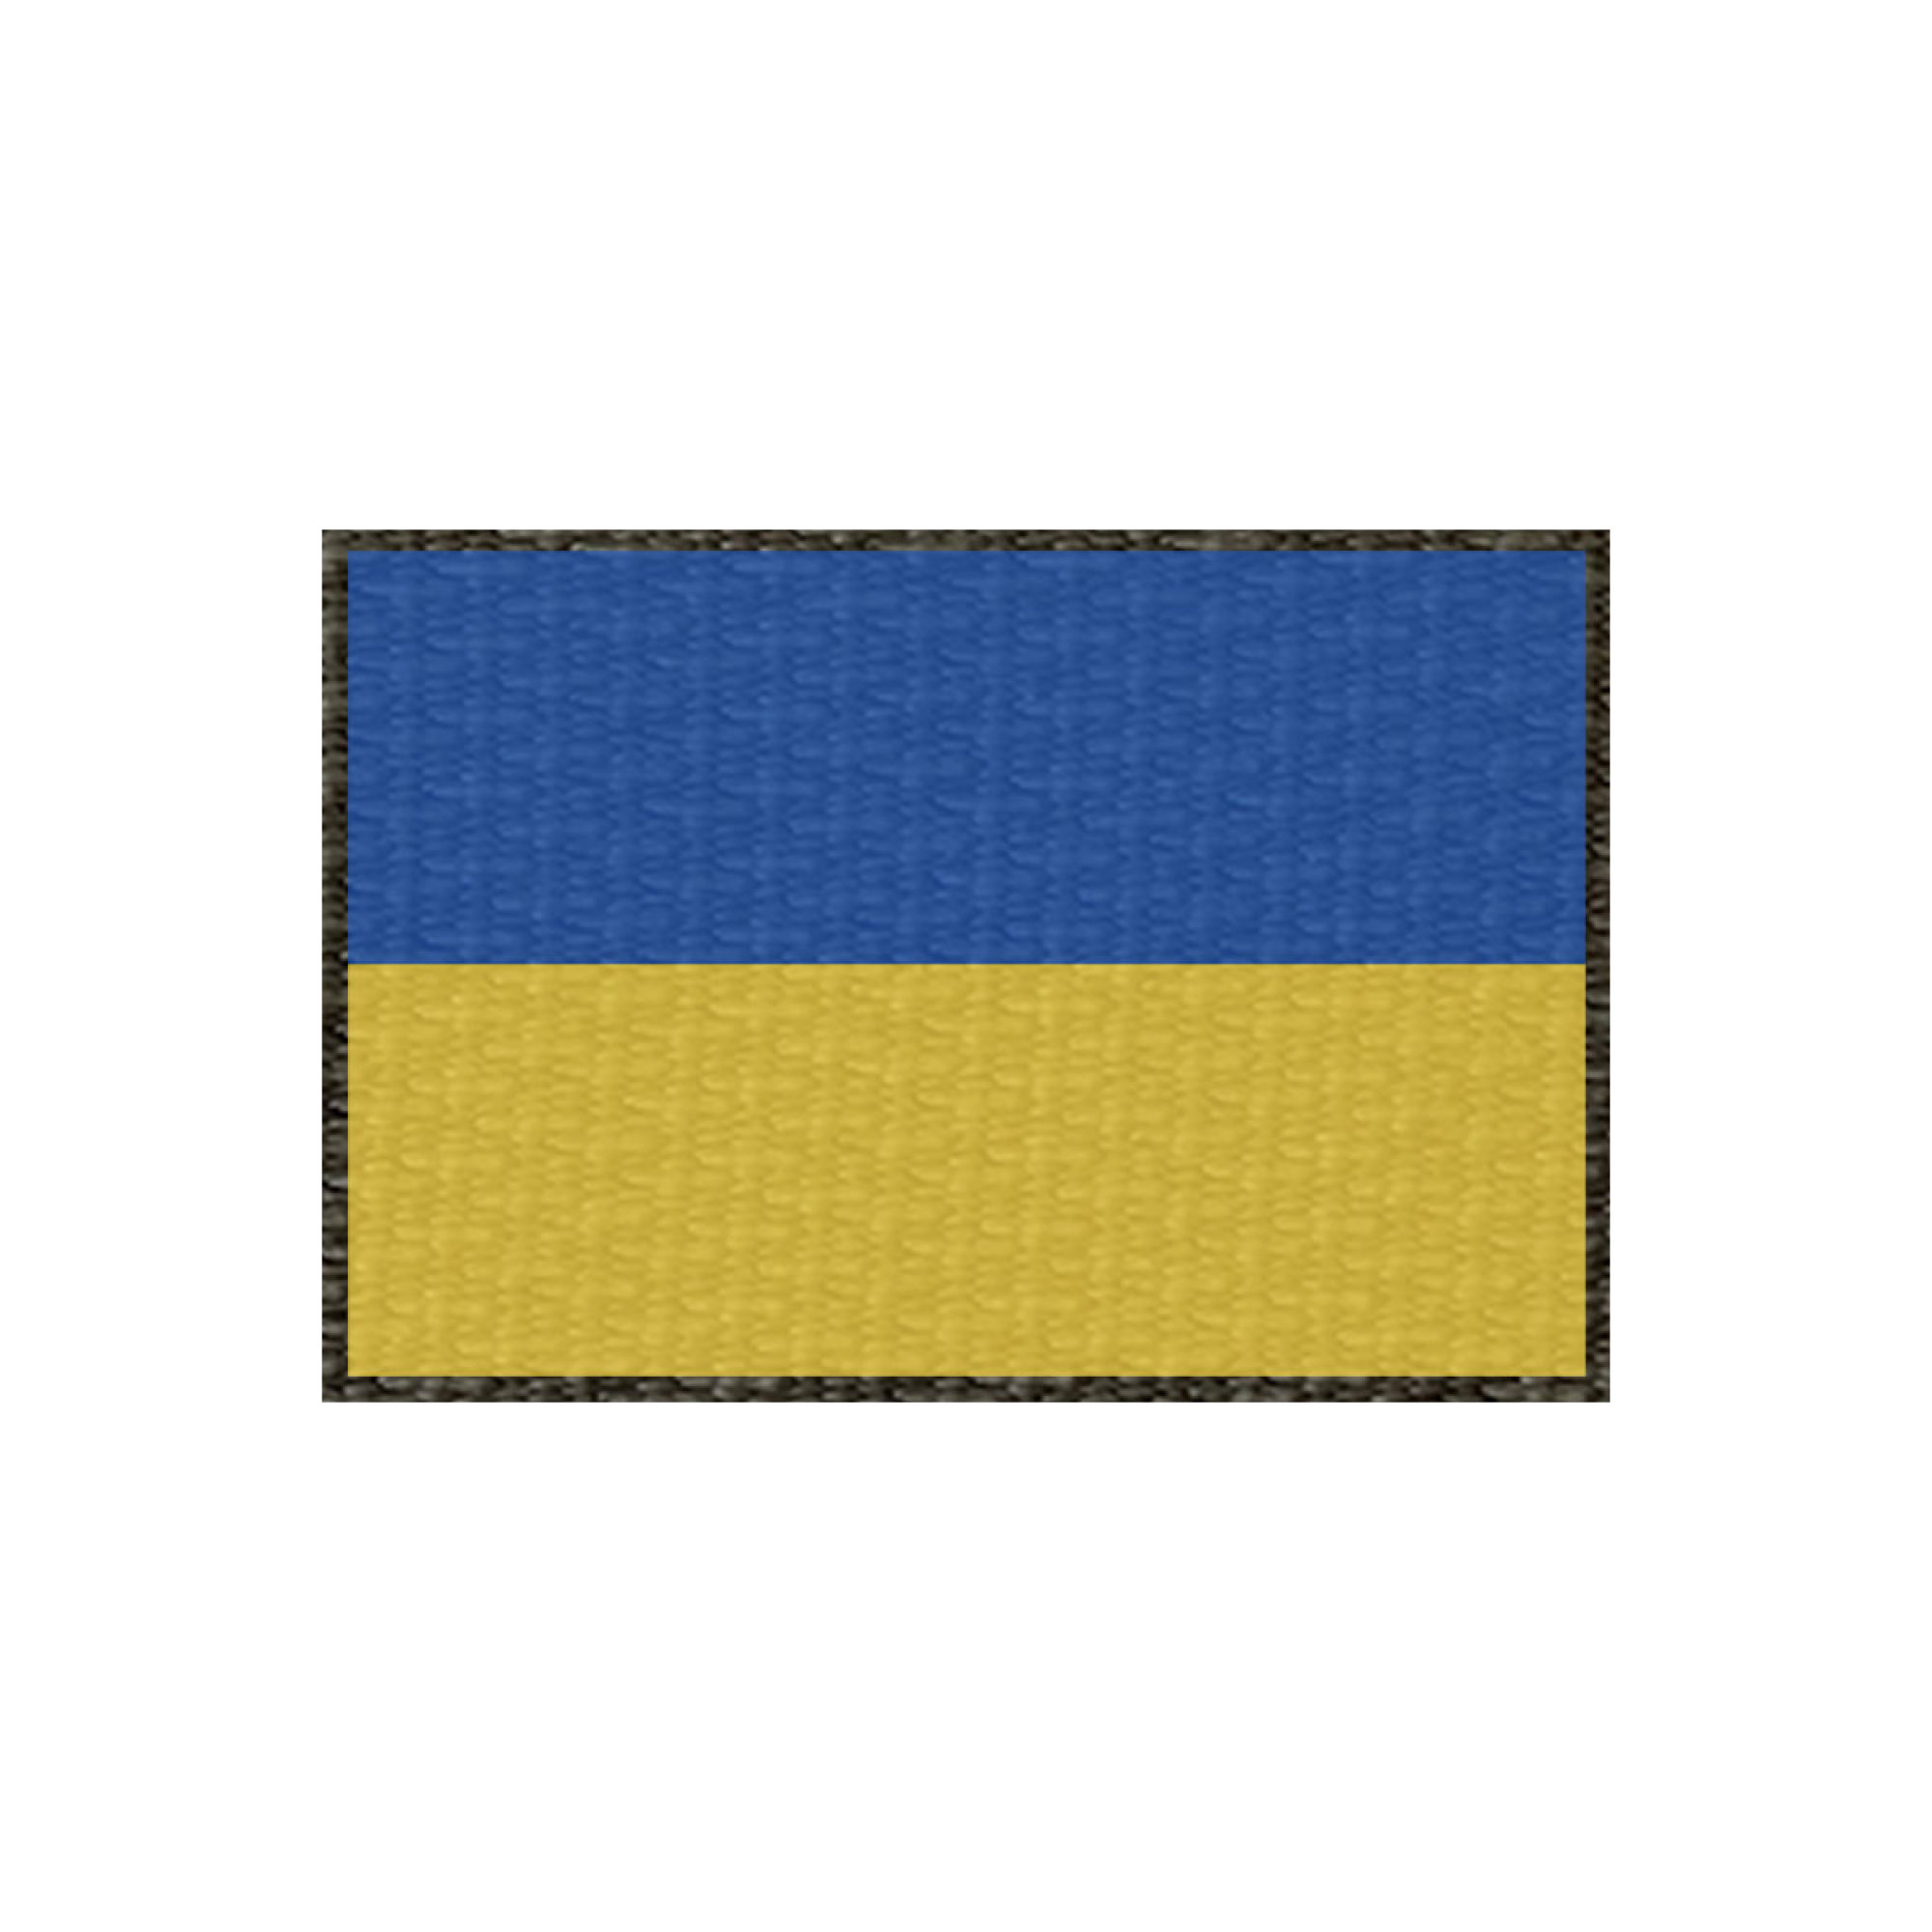 Patch Flagge Ukraine 75x50mm, Klett